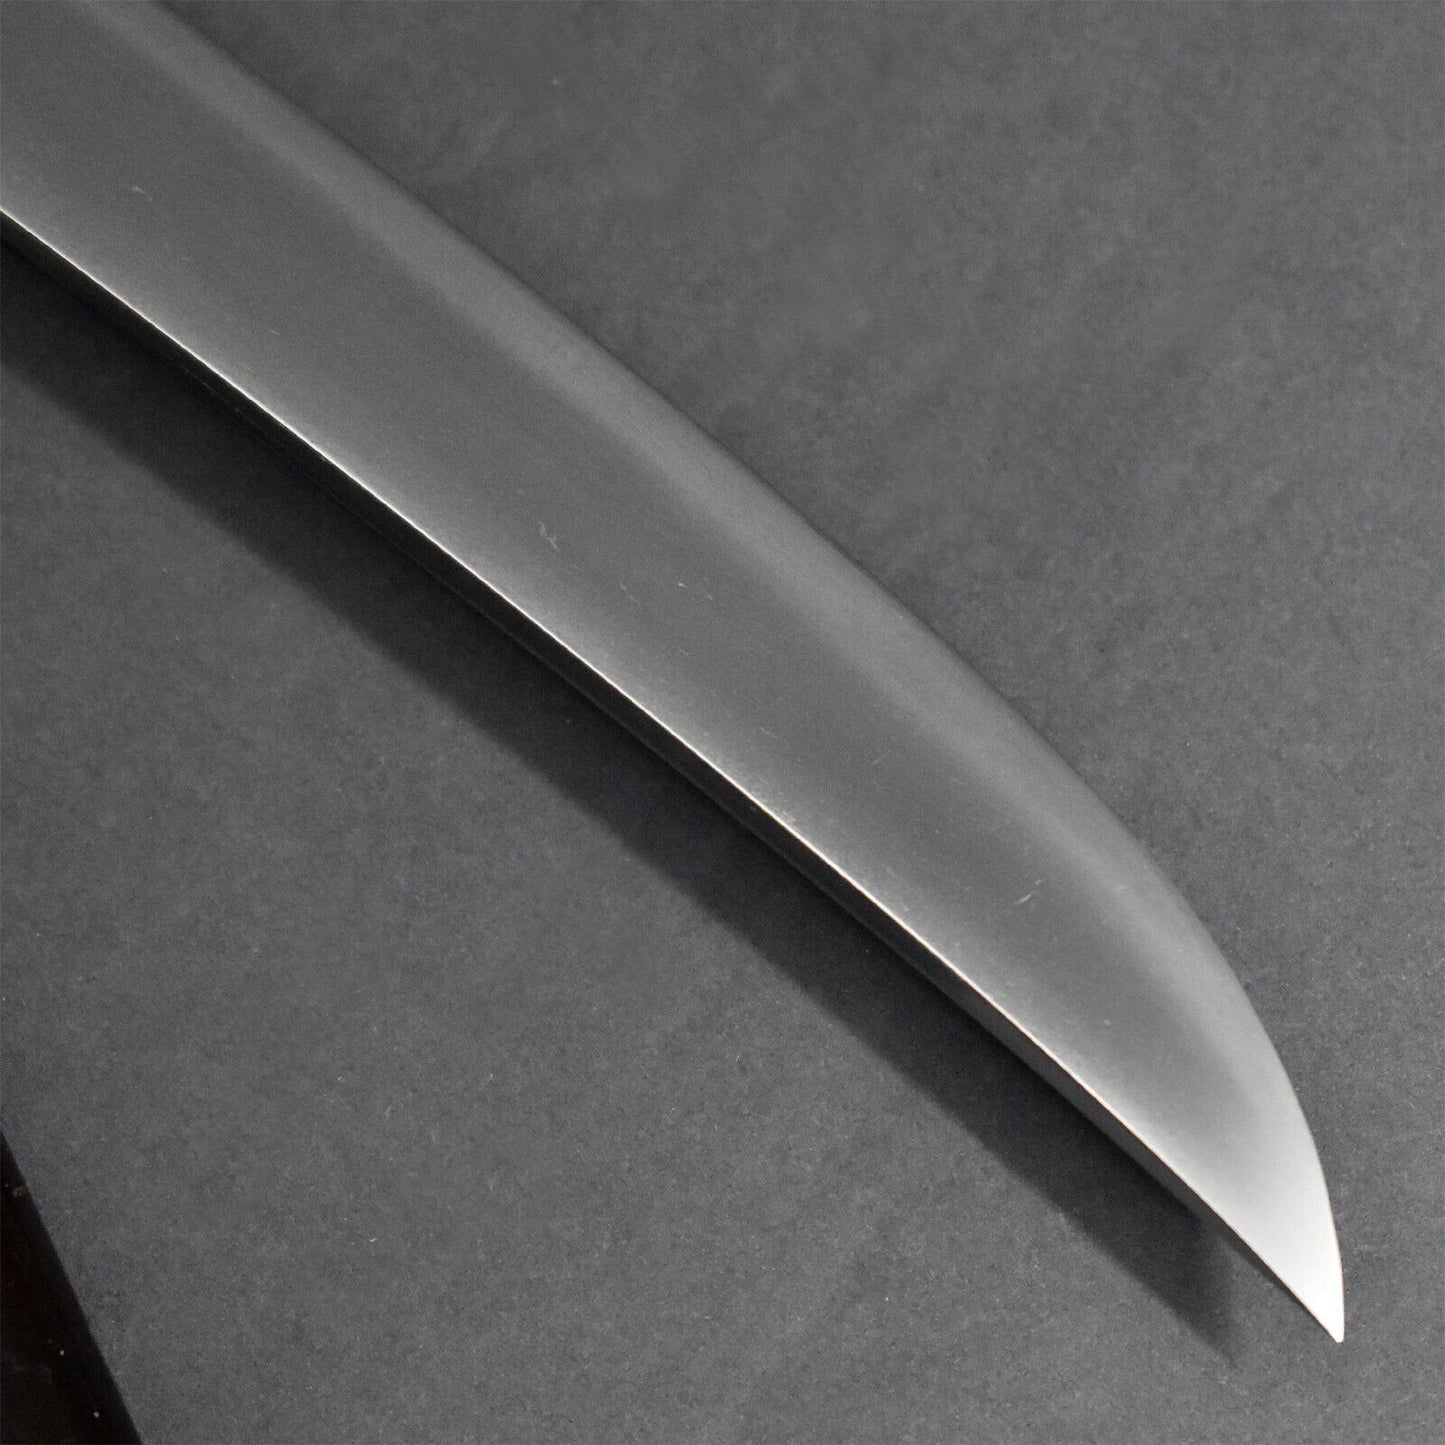 Original Antique Japanese Wakizashi Sword Signed Samurai Blade Collectible Tamahagane Weapon Edo Era.